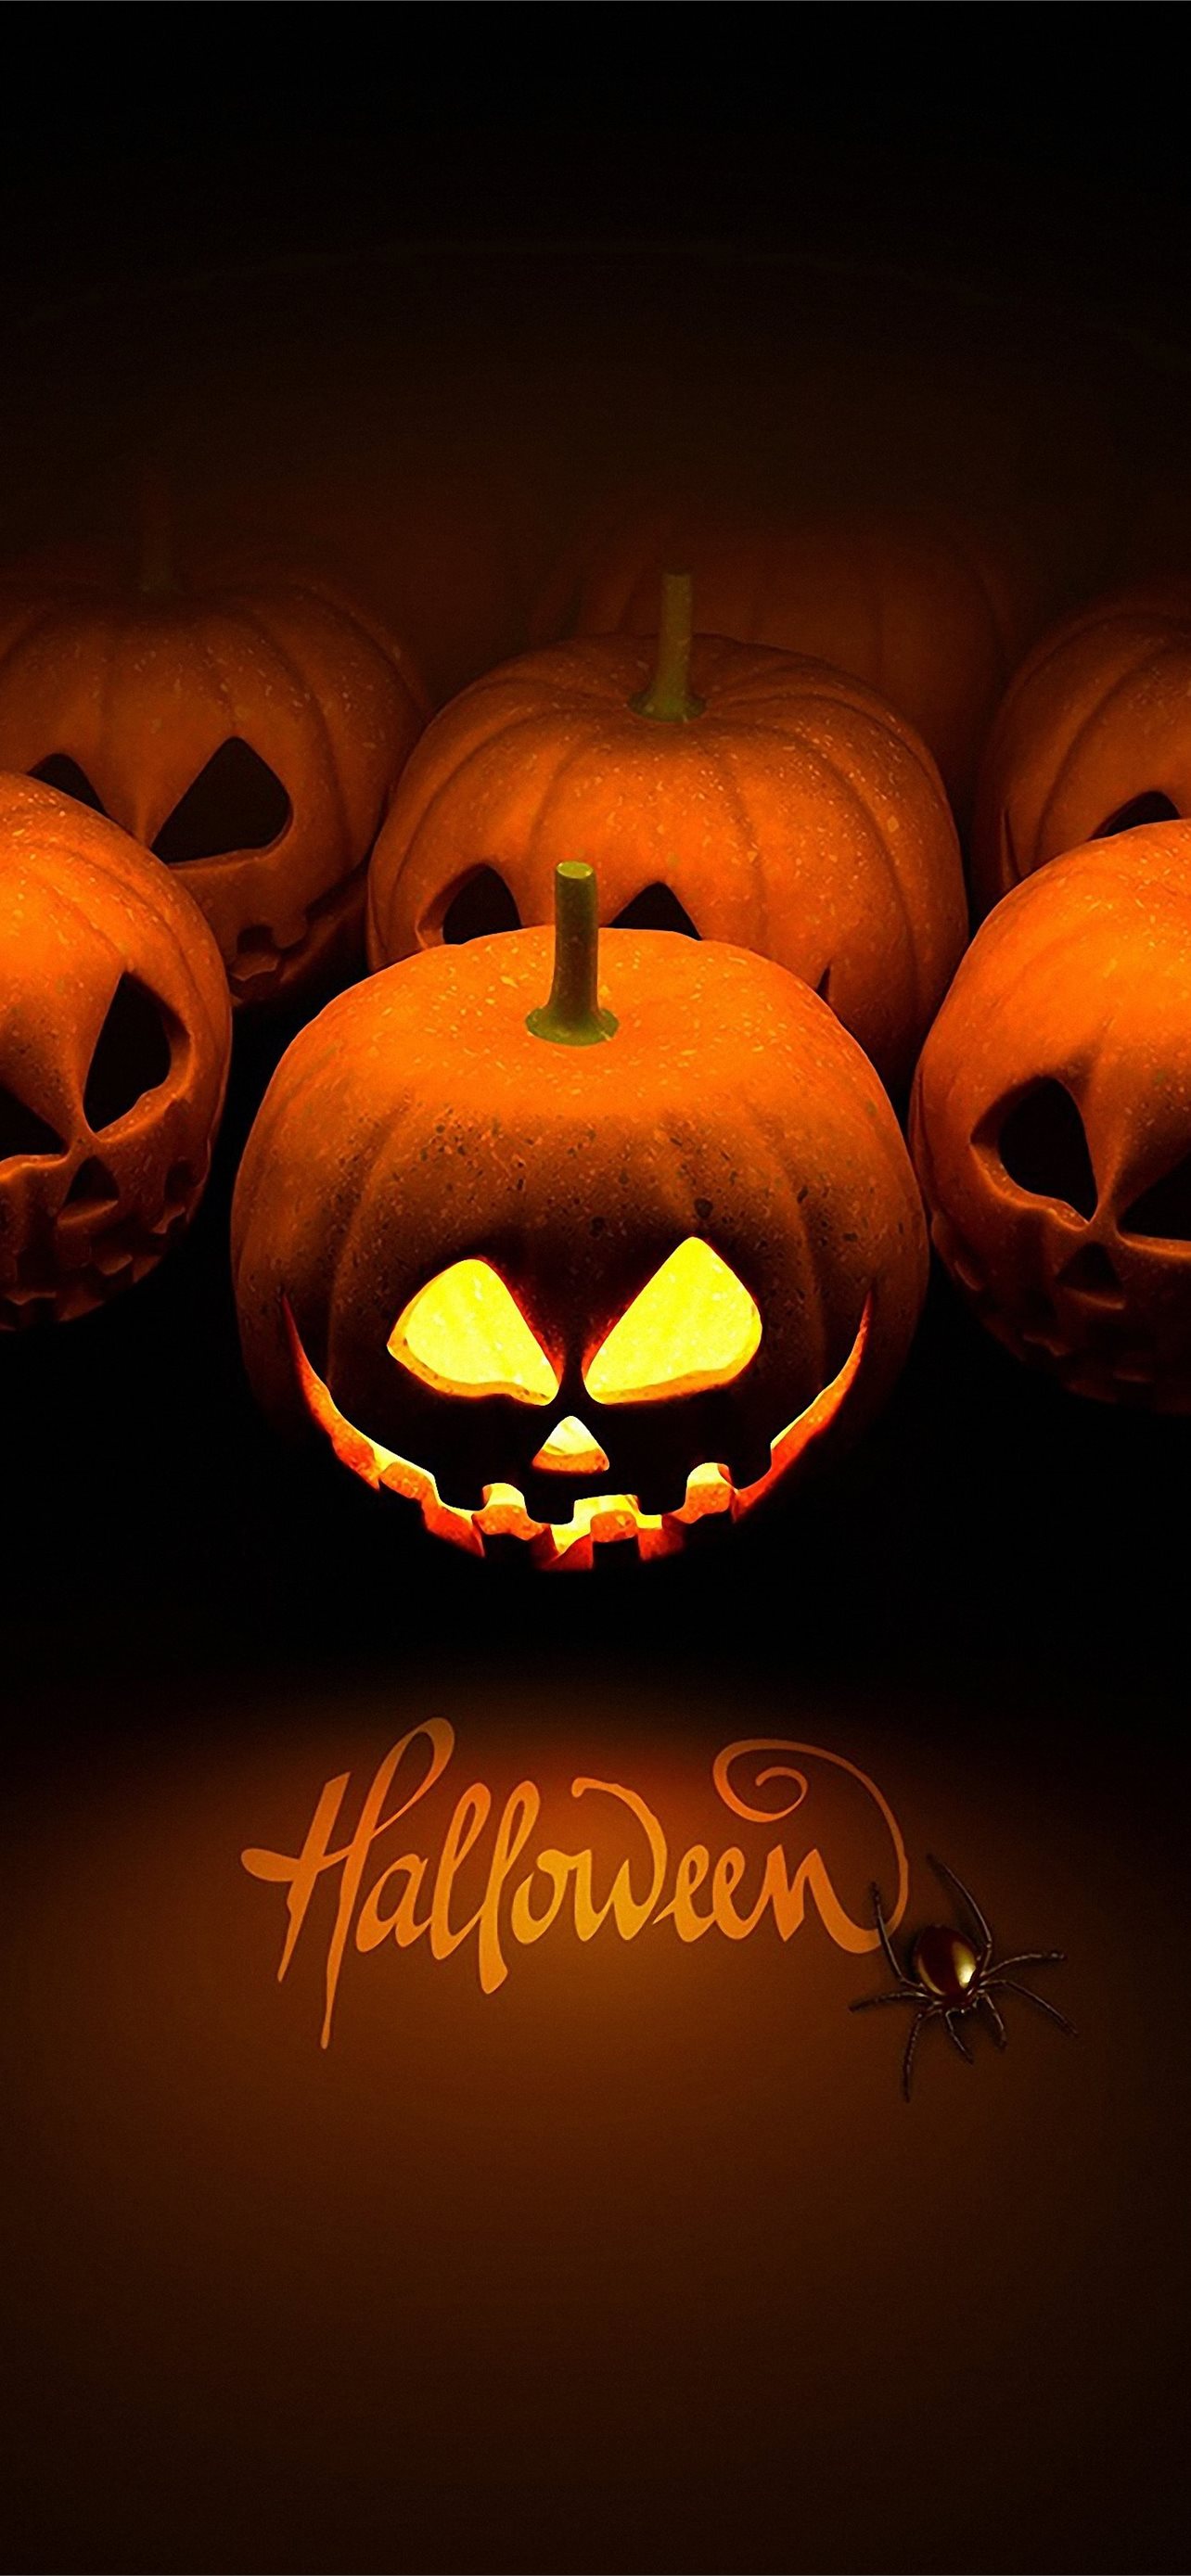 Free Hd Halloween Pumpkin Galaxy S8 Halloween for ... iPhone Wallpapers  Free Download